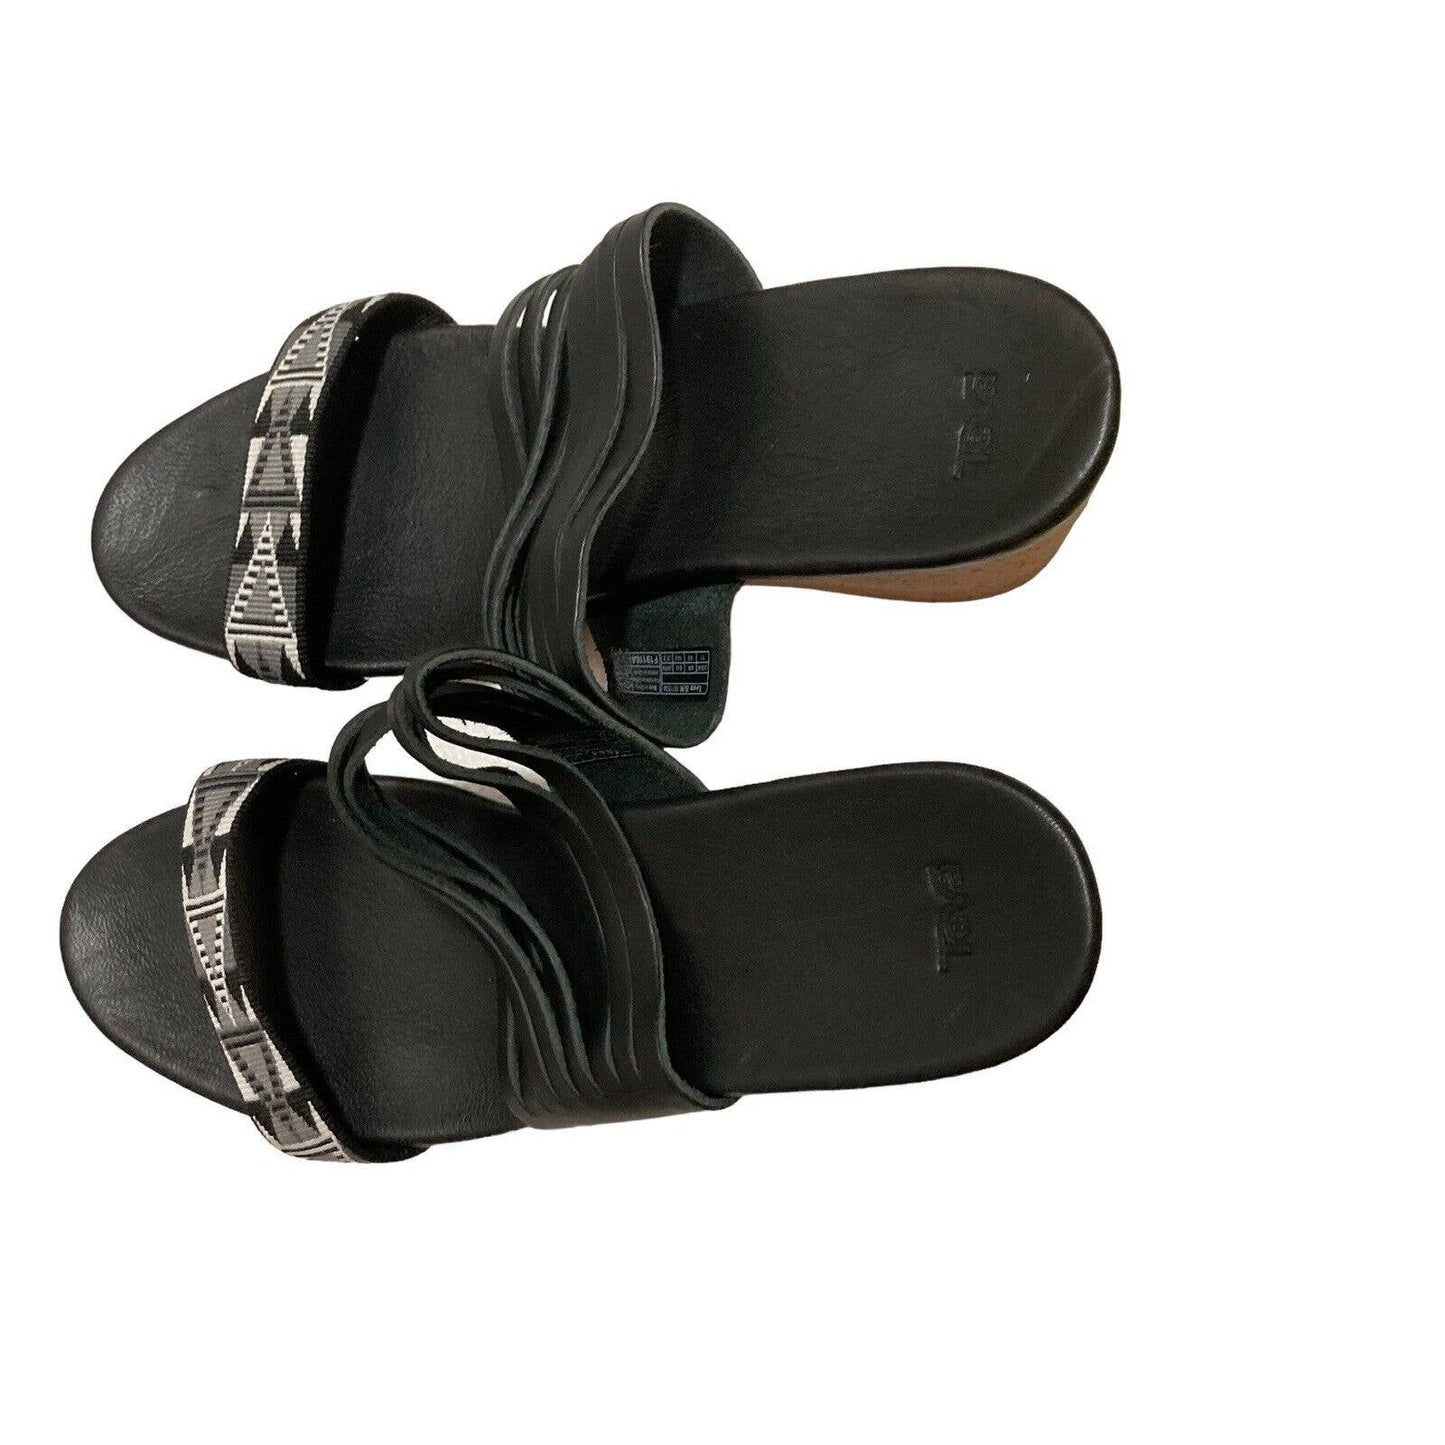 Teva Women Size 11 Arrabelle Black Leather Cork Wedge Aztec Slides Sandals